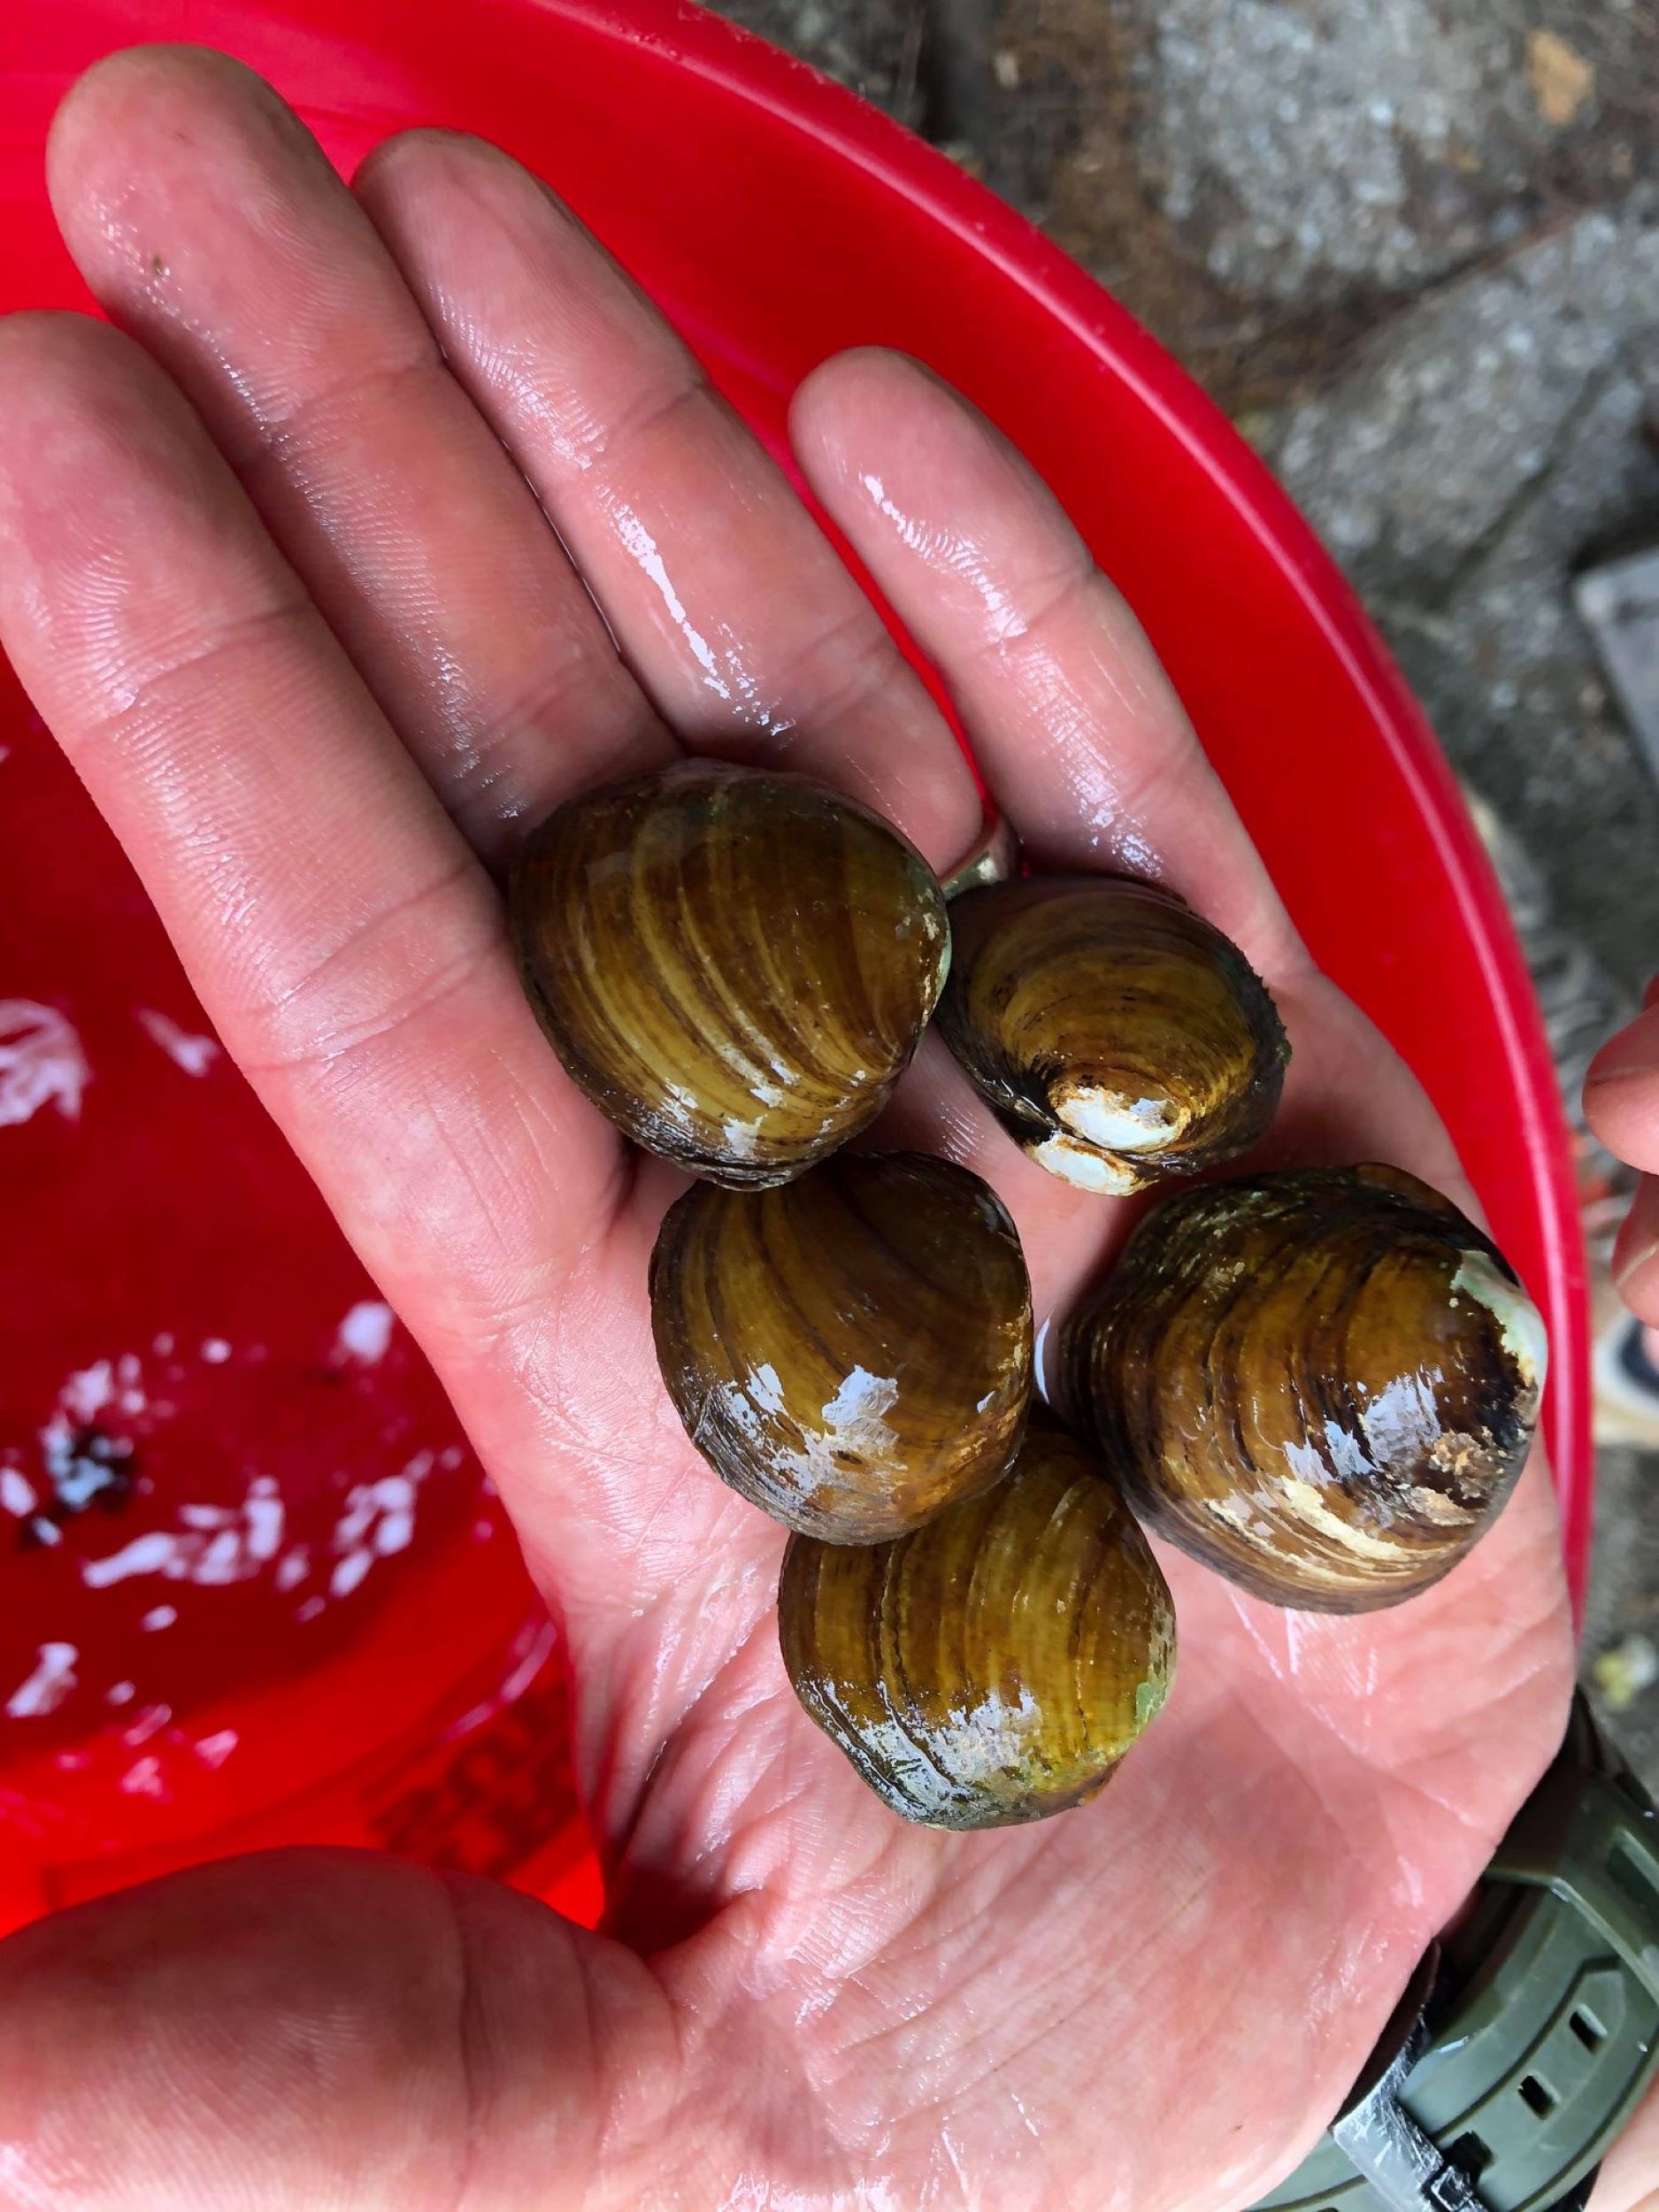 Round Hickorynut mussels